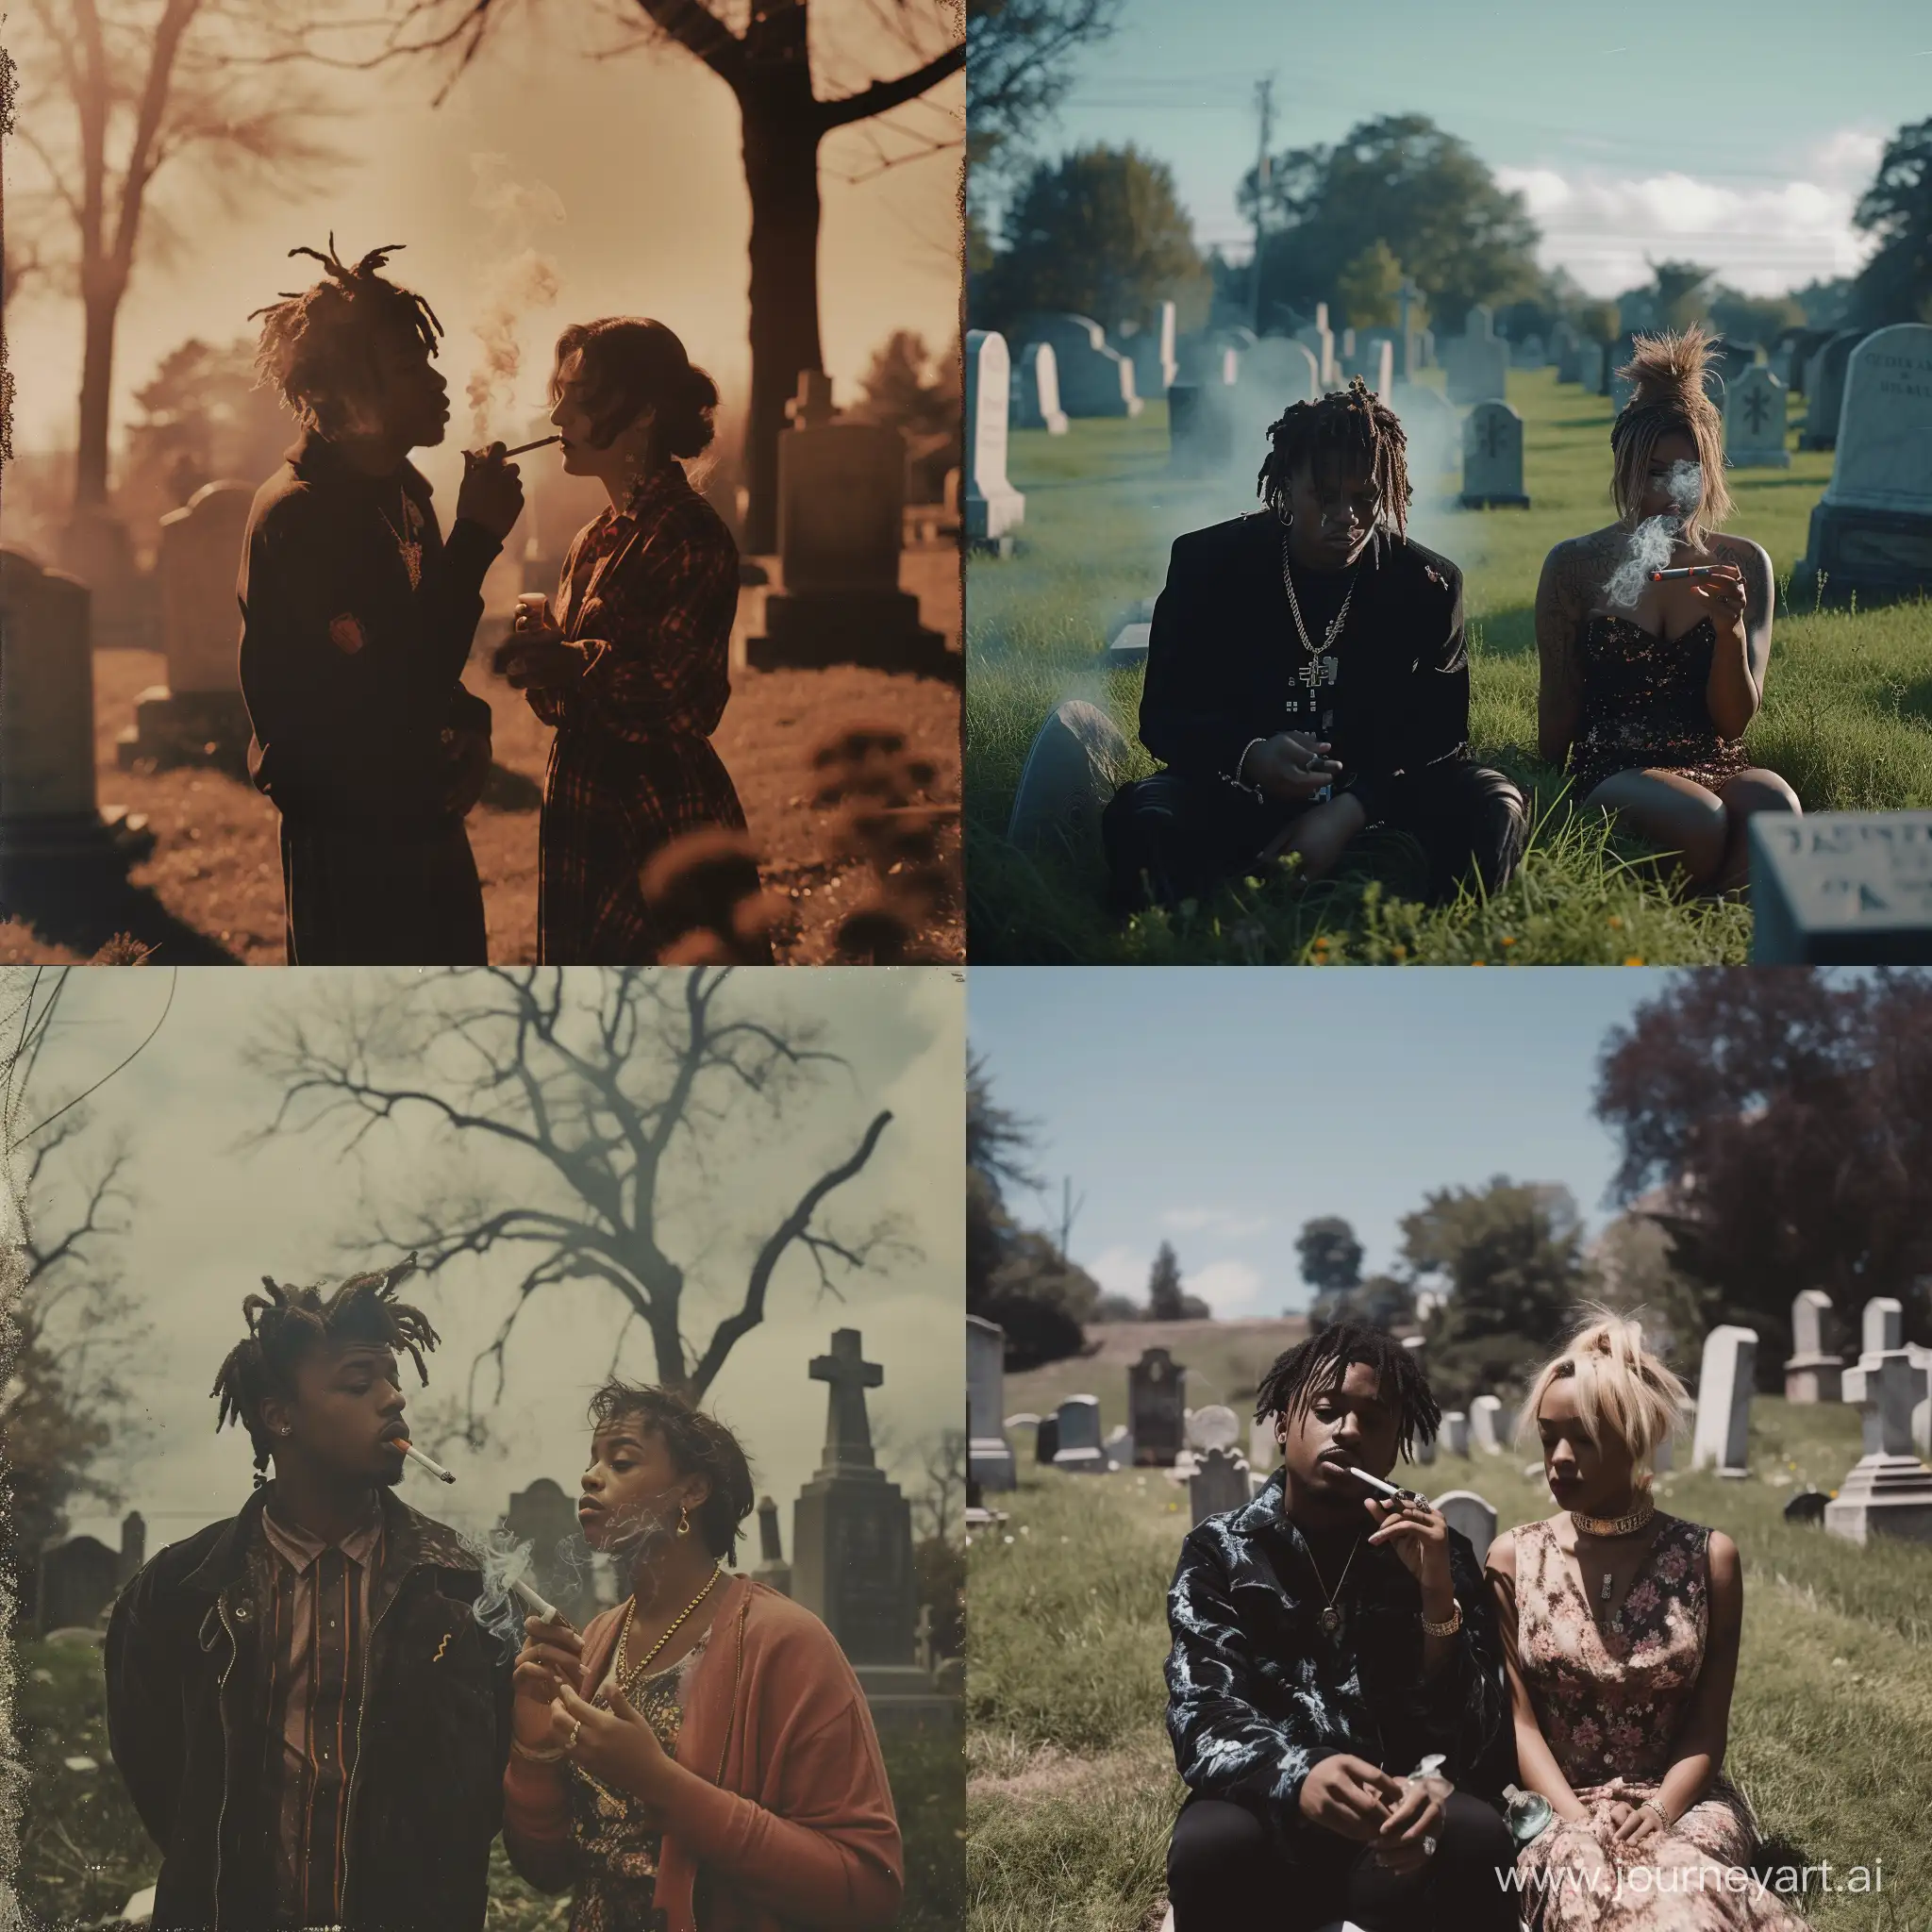 1950s-Movie-Scene-Juice-WRLD-Smoking-with-Woman-in-Cemetery